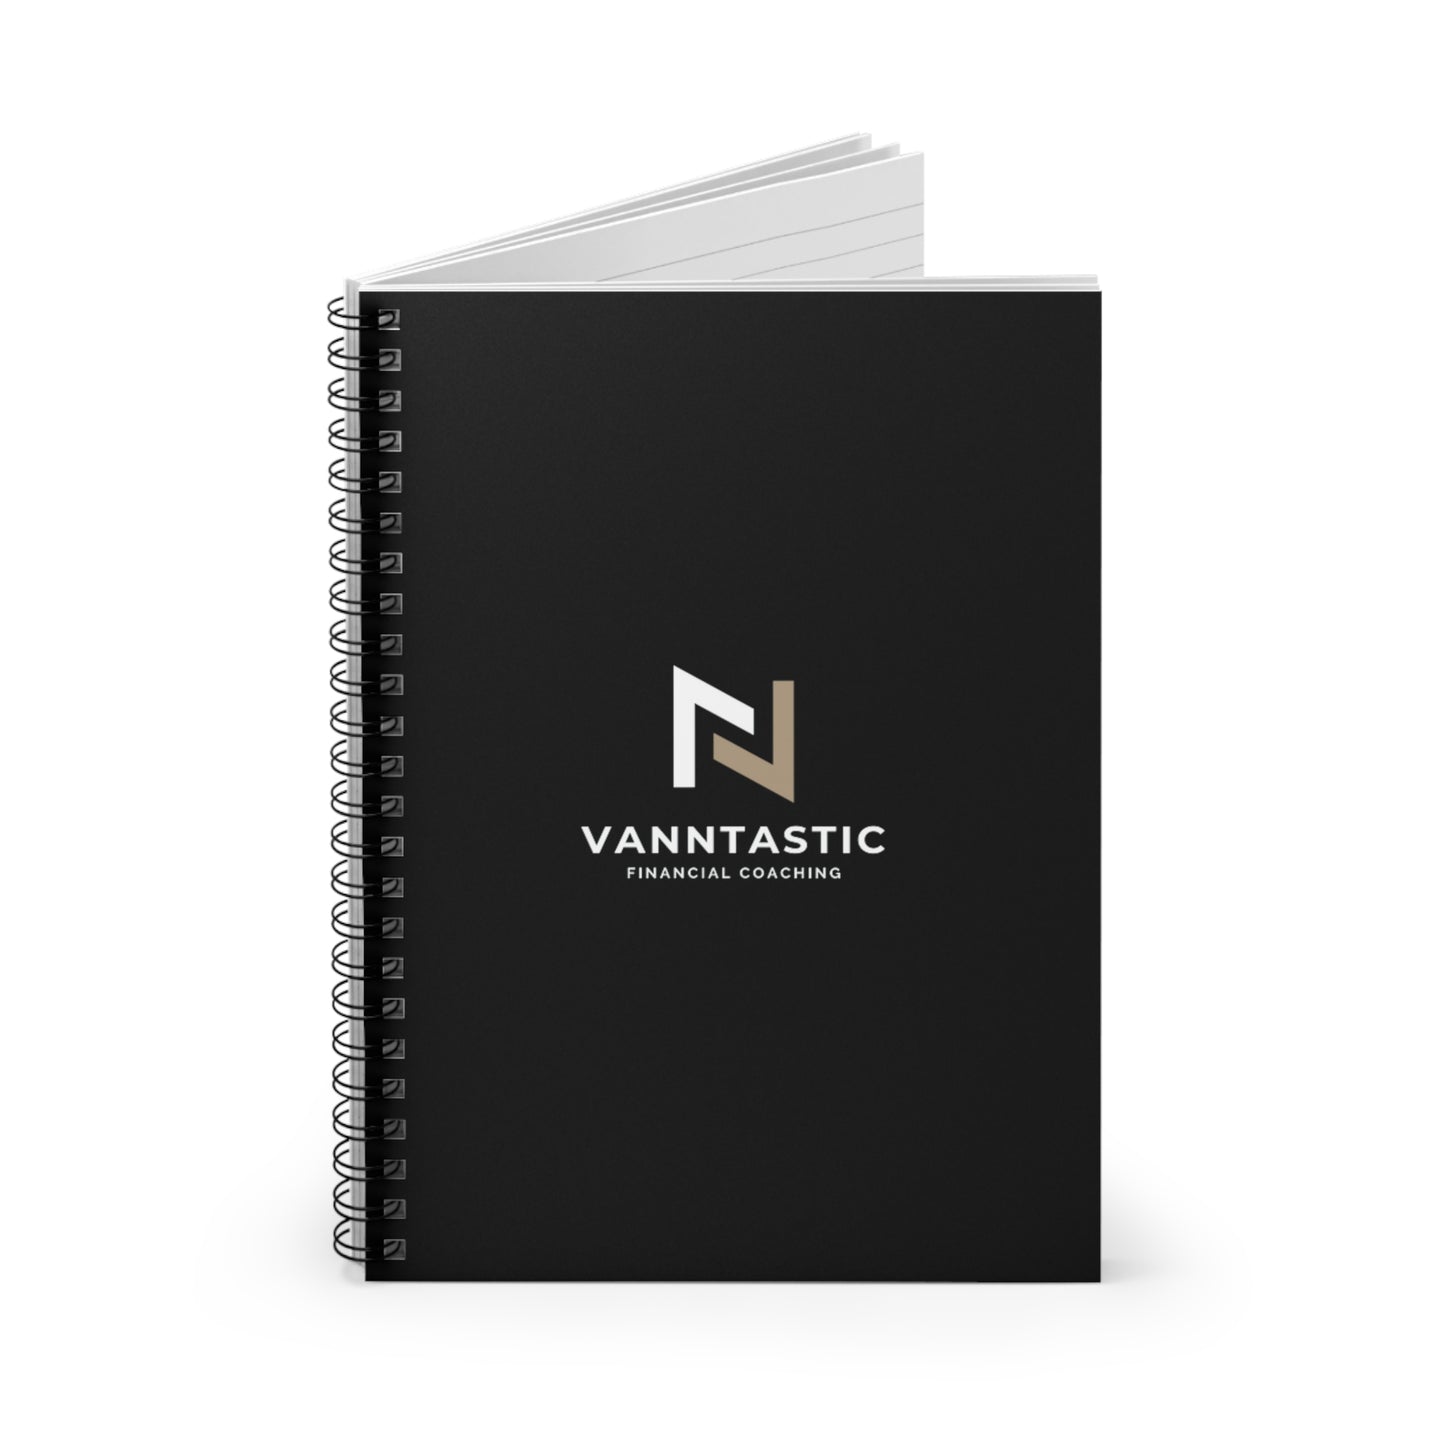 VANNtastic! Spiral Notebook - Ruled Line